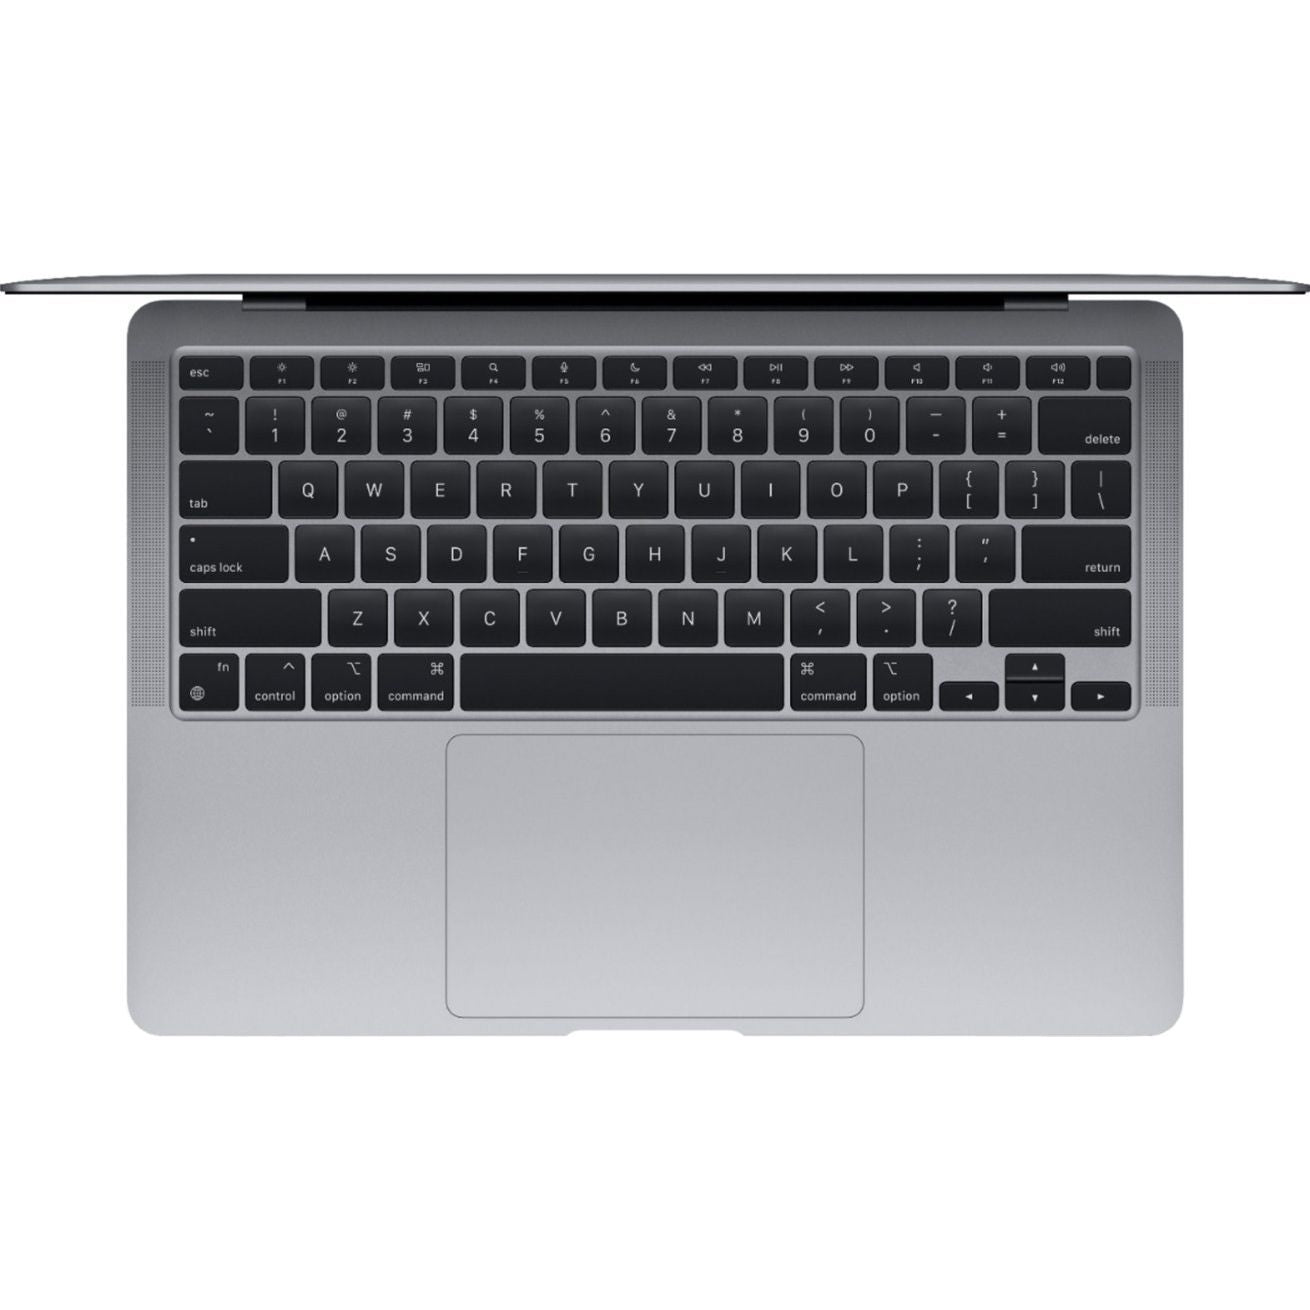 MacBook Air 13.3-inch Laptop M1 - 16GB RAM 512GB SSD - Space Gray (2020)